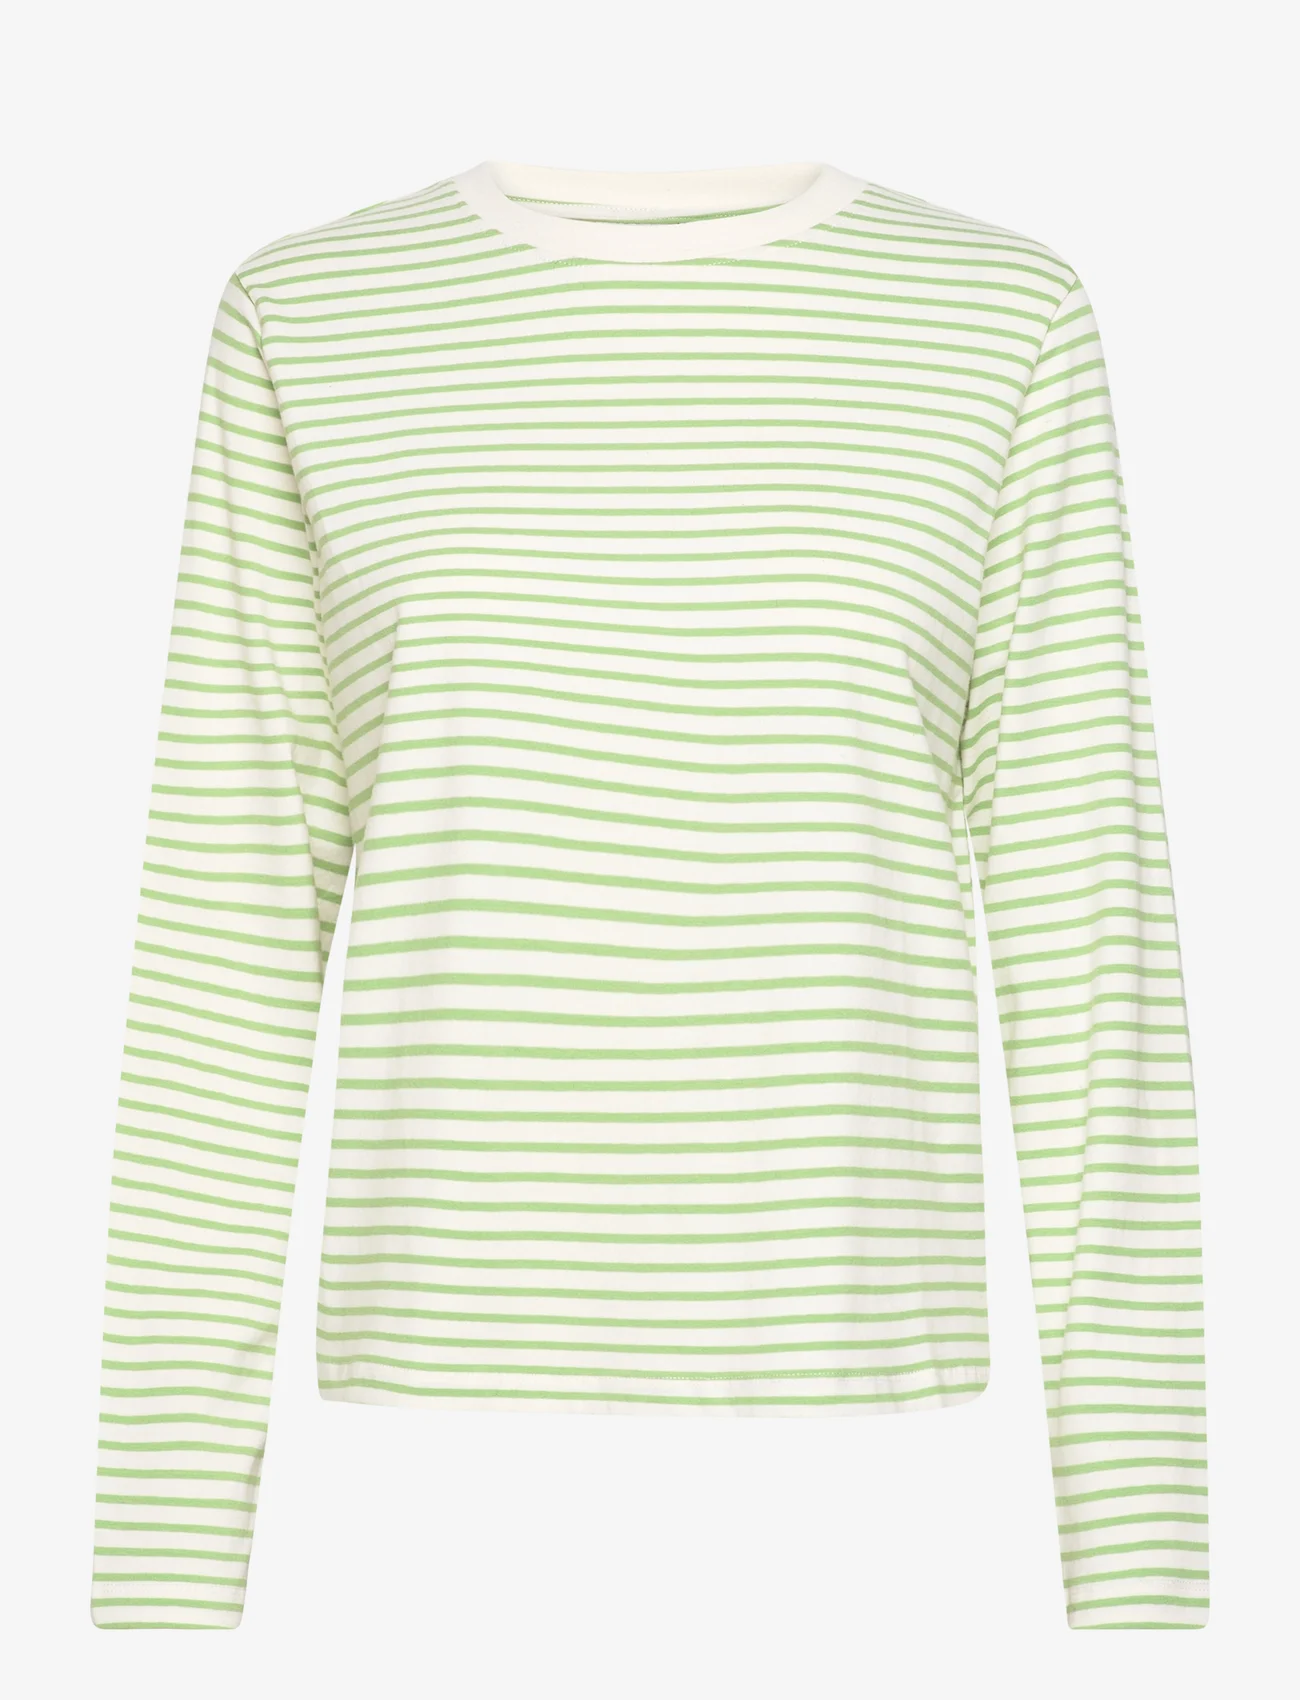 ICHI - IHMIRA LS2 - long-sleeved shirts - green tea stripe - 1